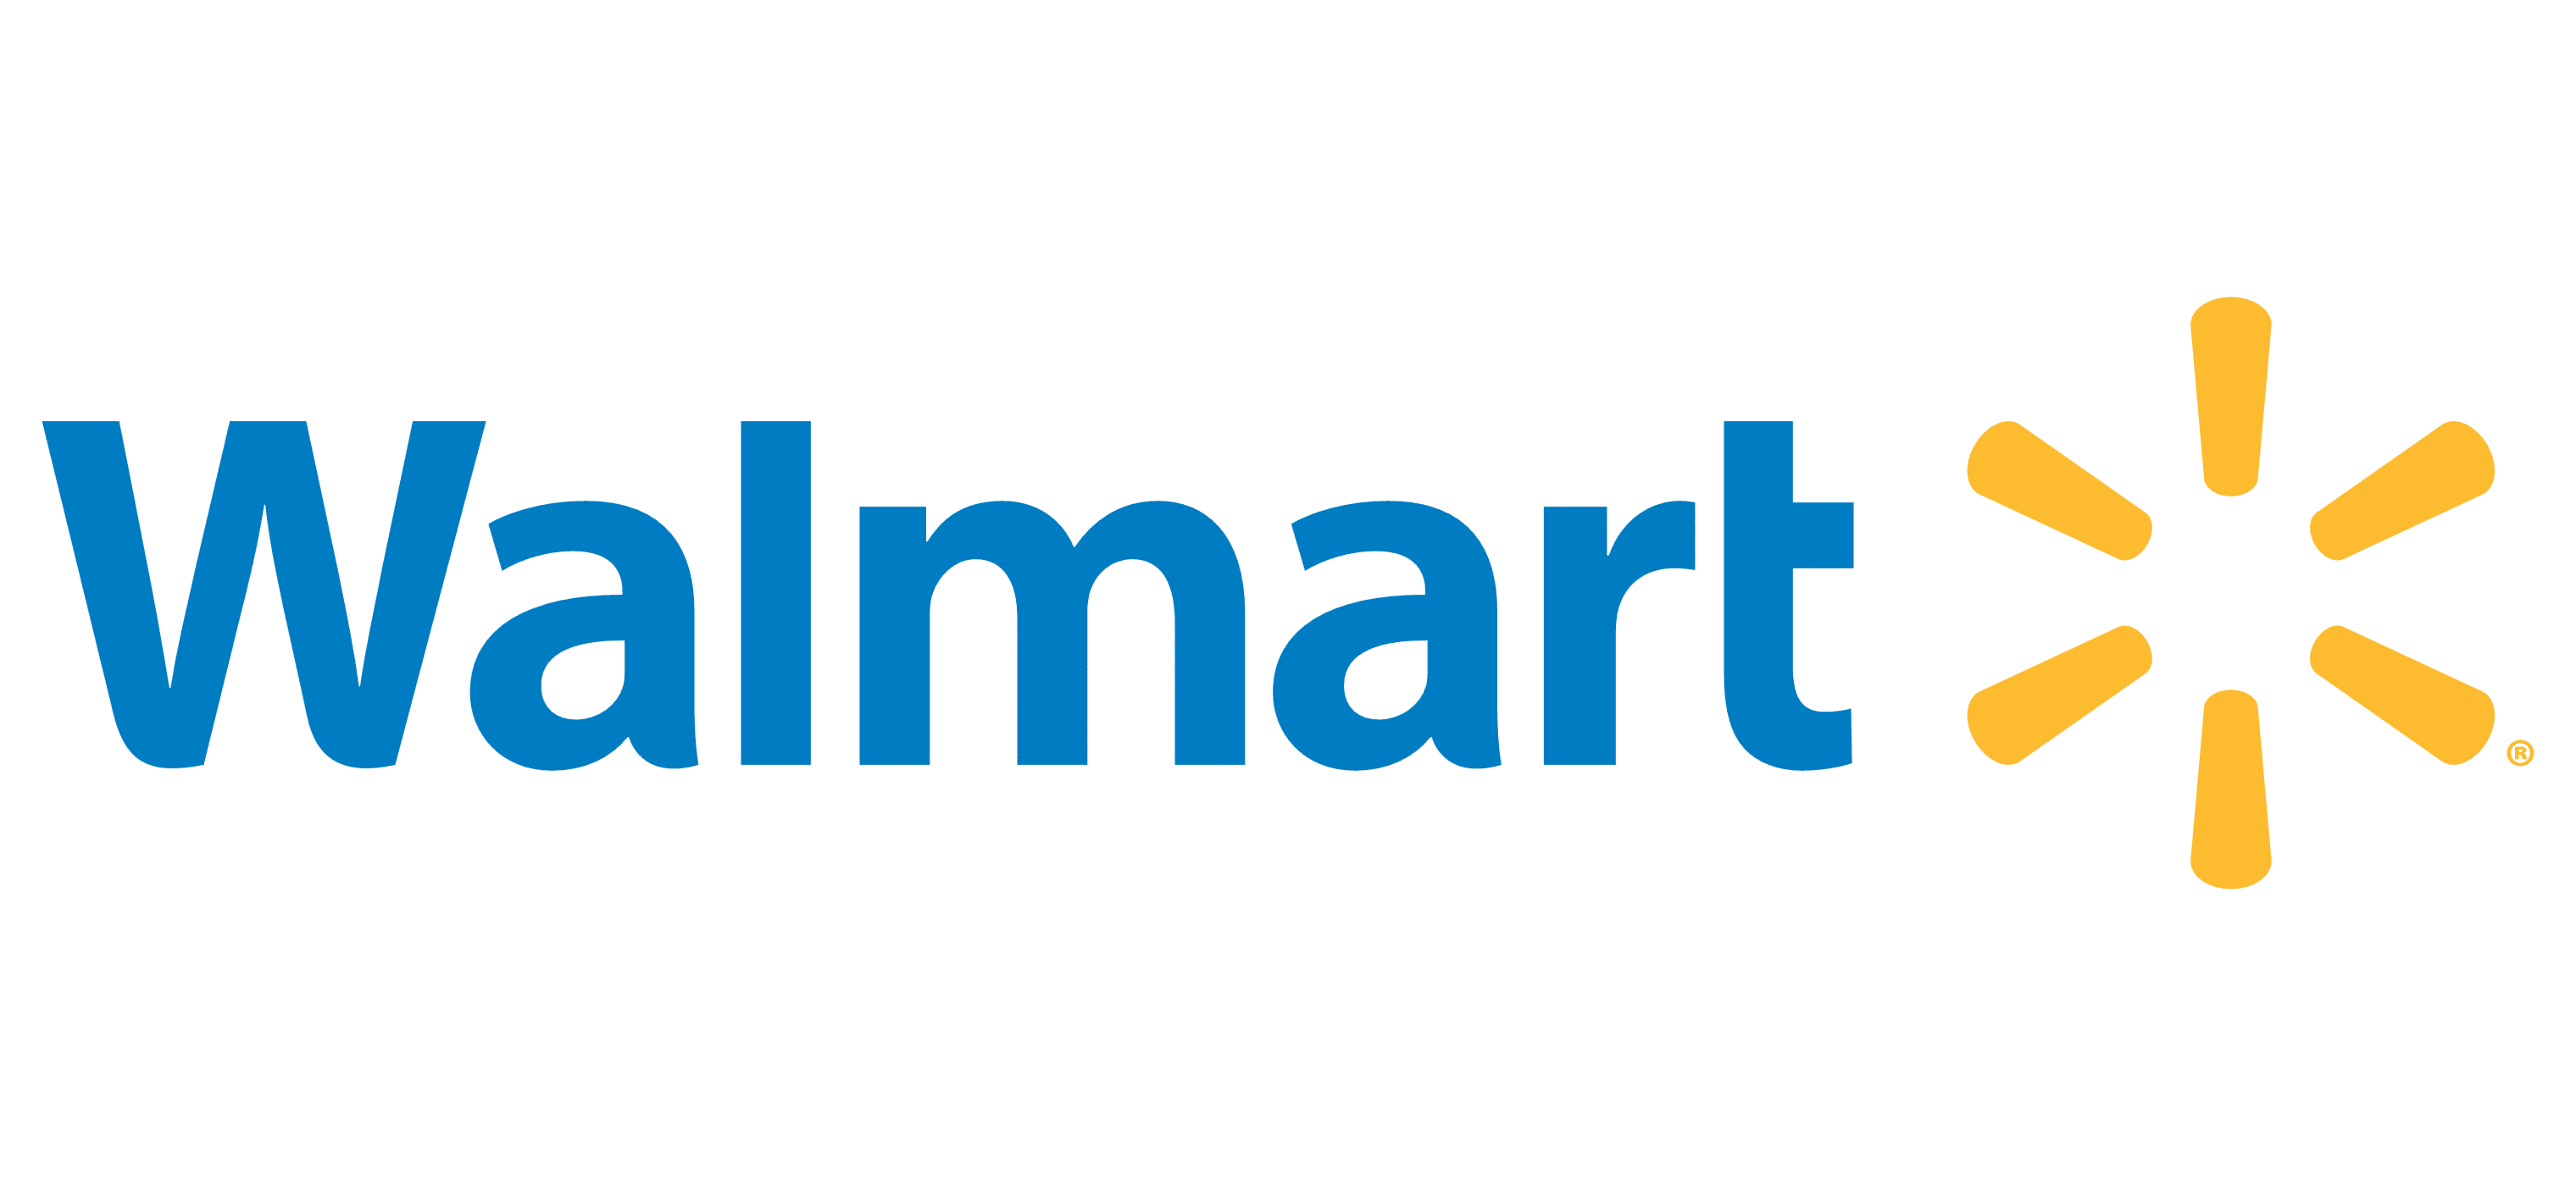 Walmart-logo-5